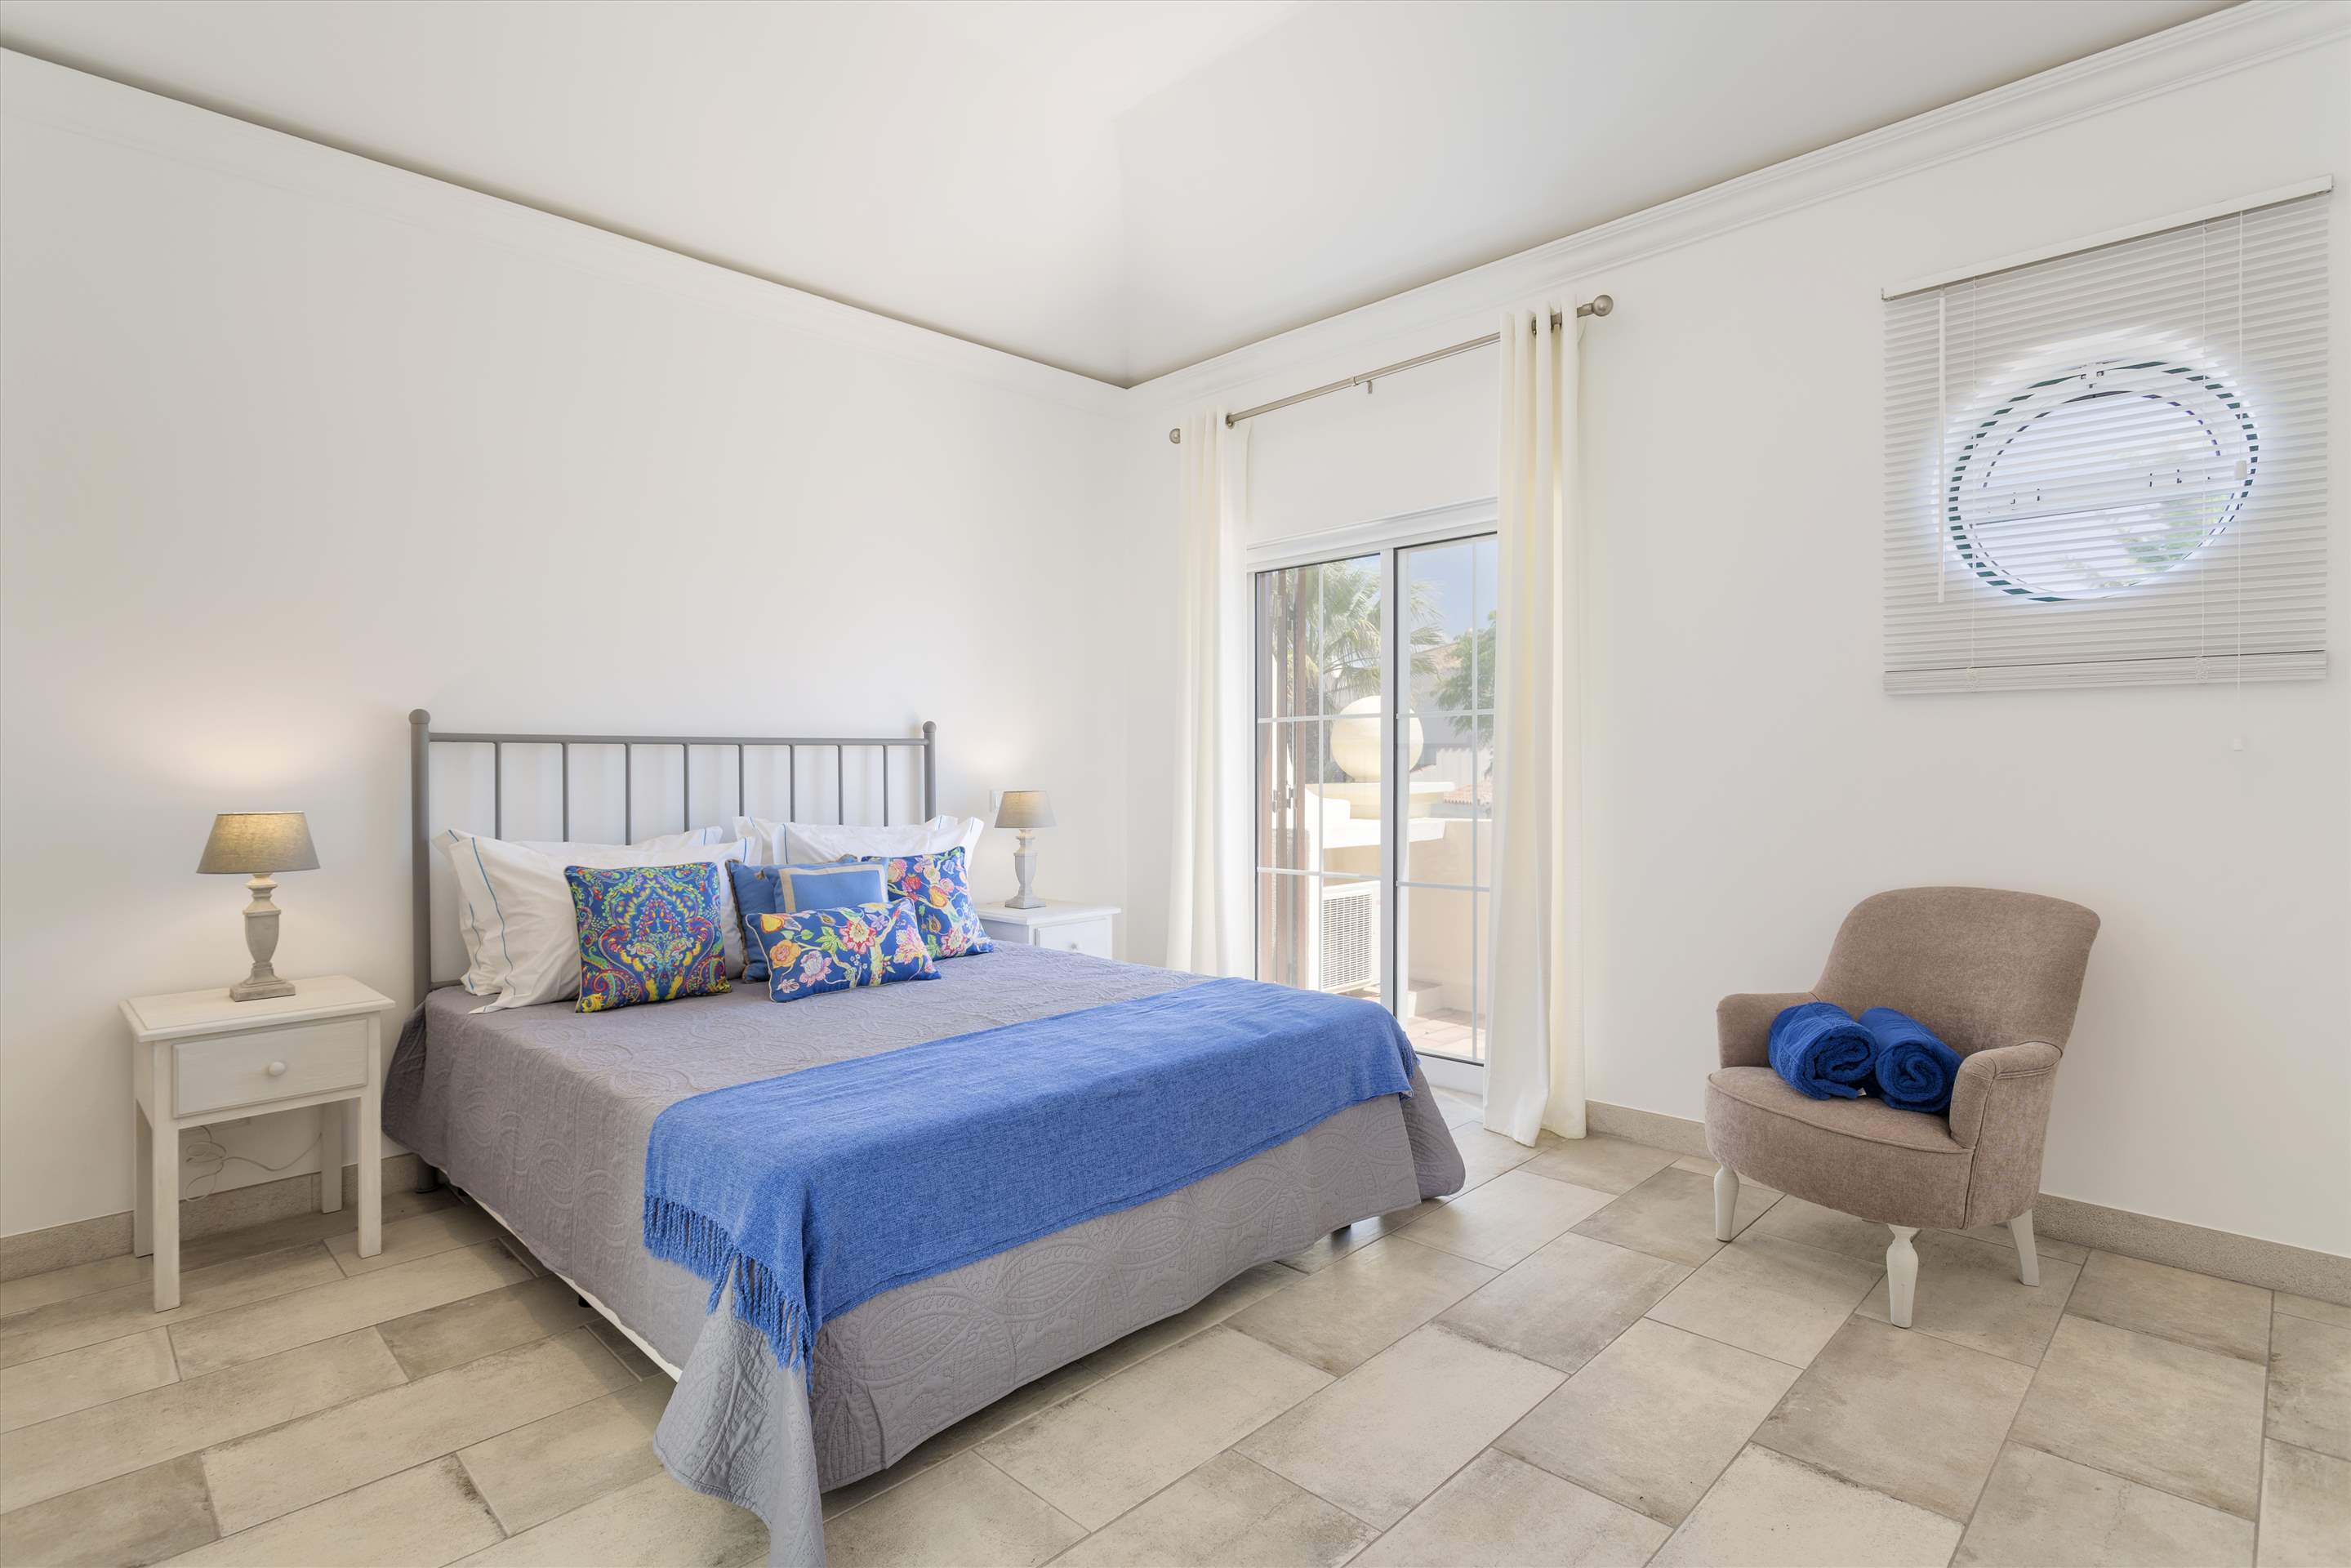 Townhouse Jessie, 3 bedroom villa in Quinta do Lago, Algarve Photo #11